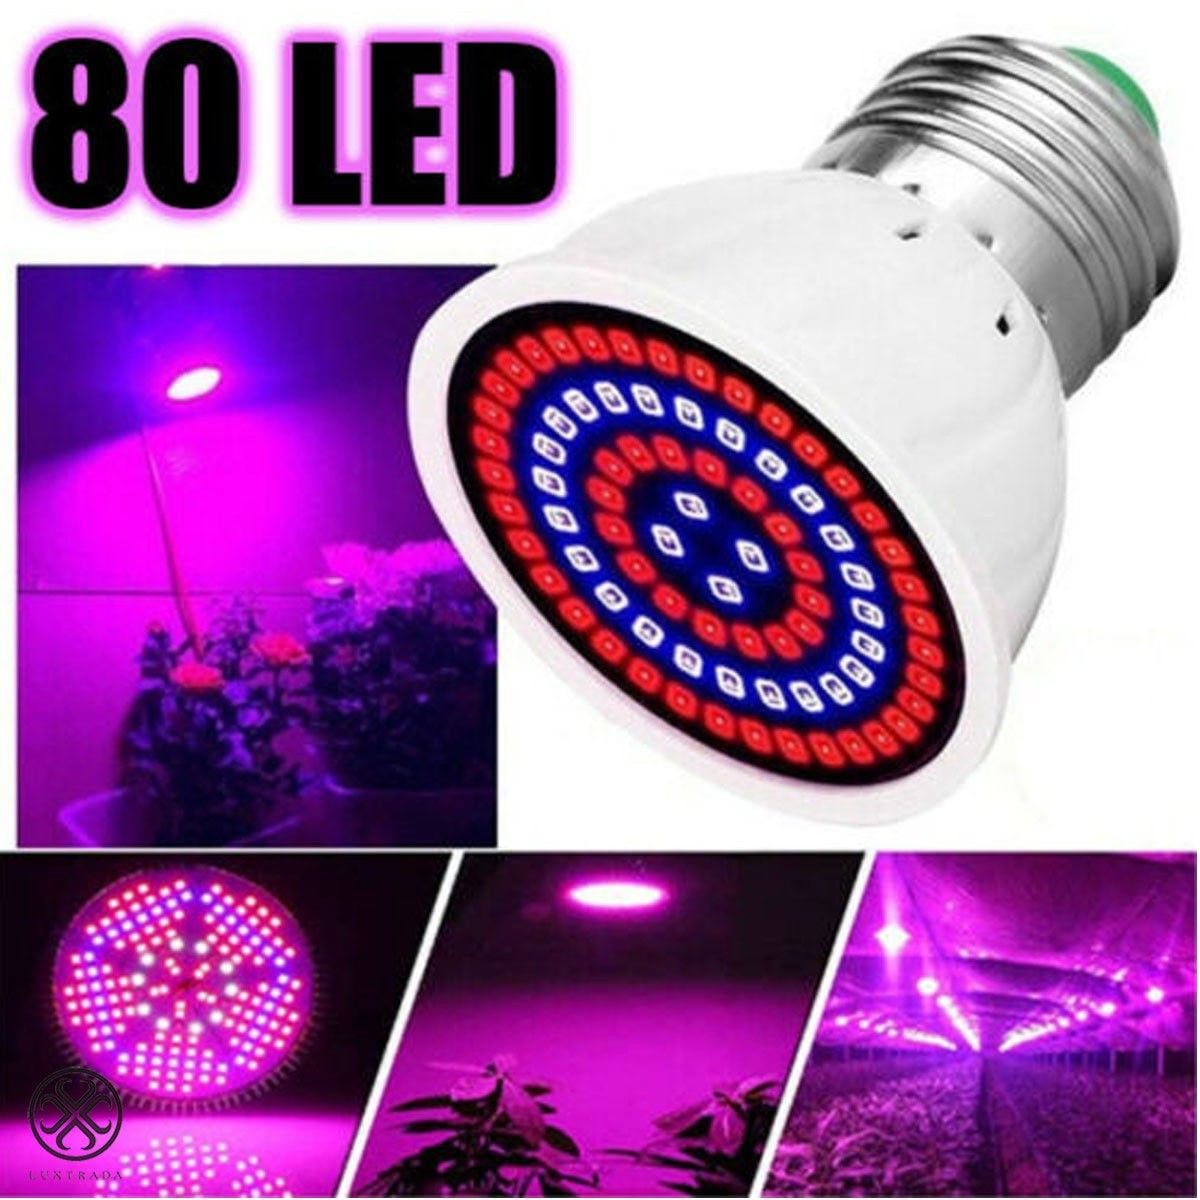 2 PCS 80 LED E27 Grow Light Bulb Indoor Plants Growing Lights Full Spectrum Lamp 